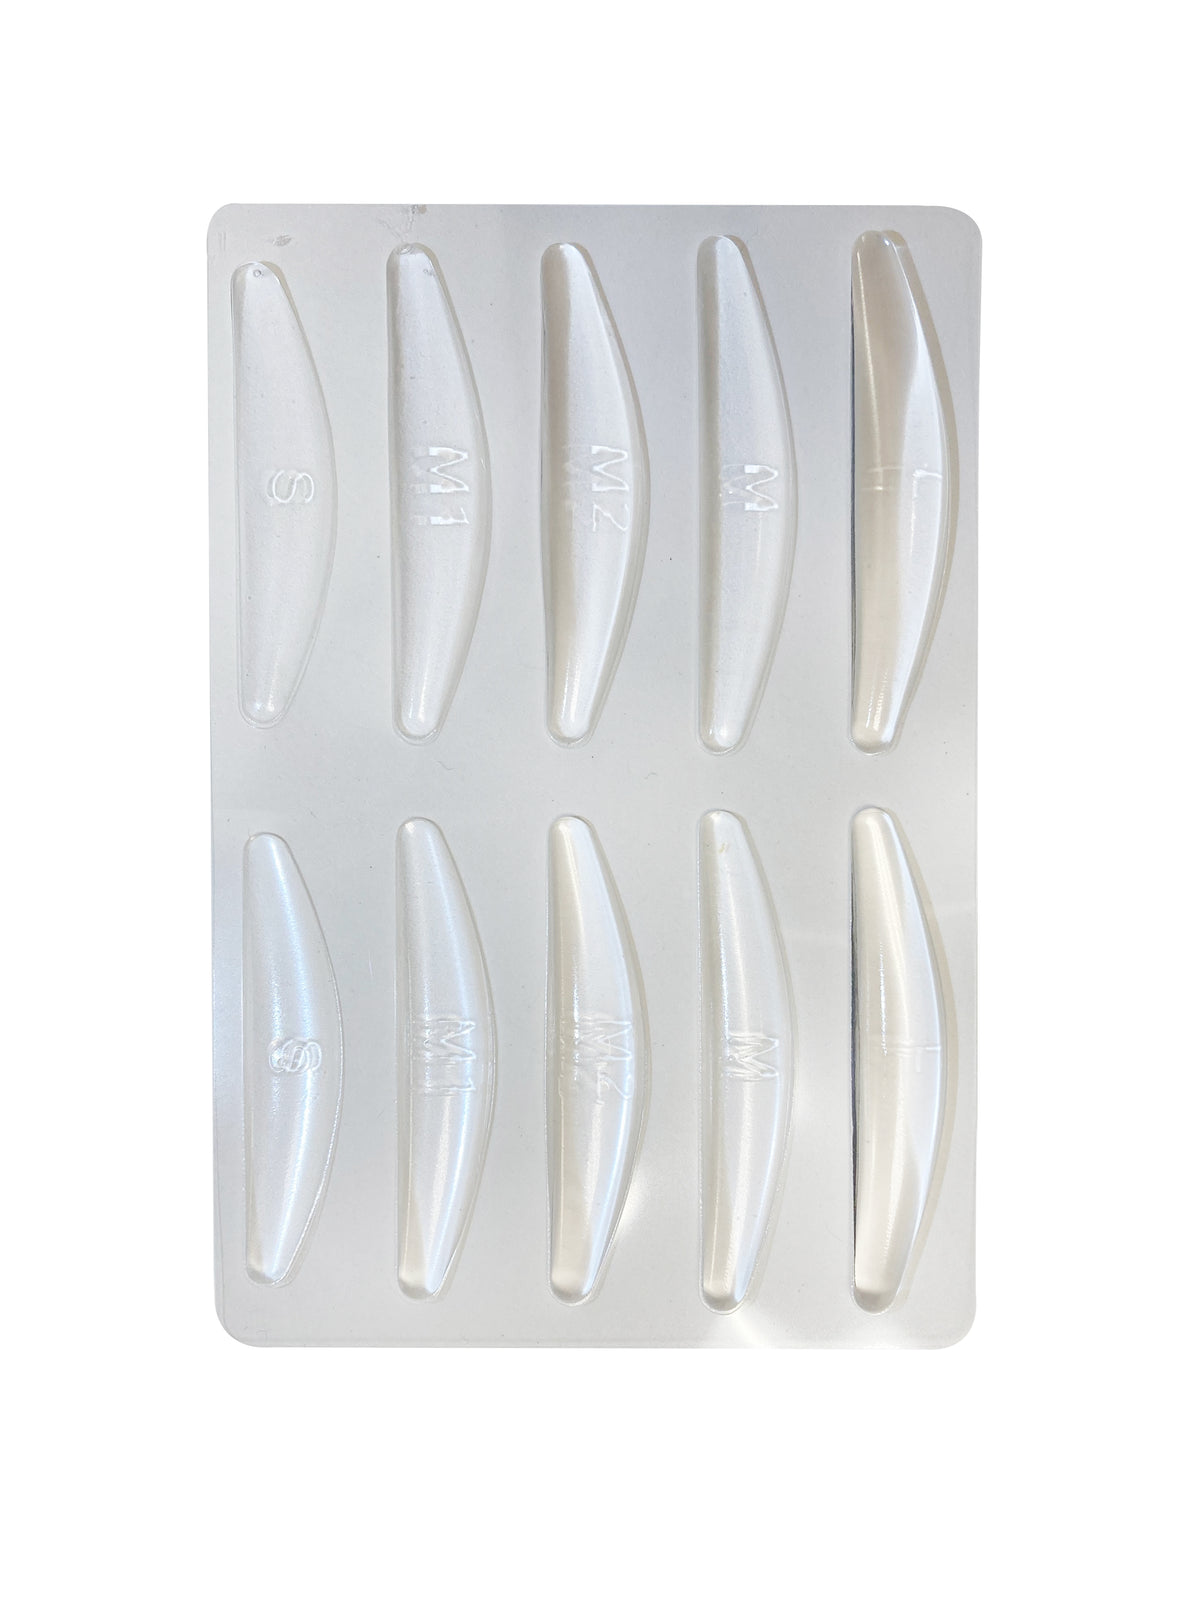 AYASAL Self-adhesive Lift Pads, 5 Pairs in 1 Board